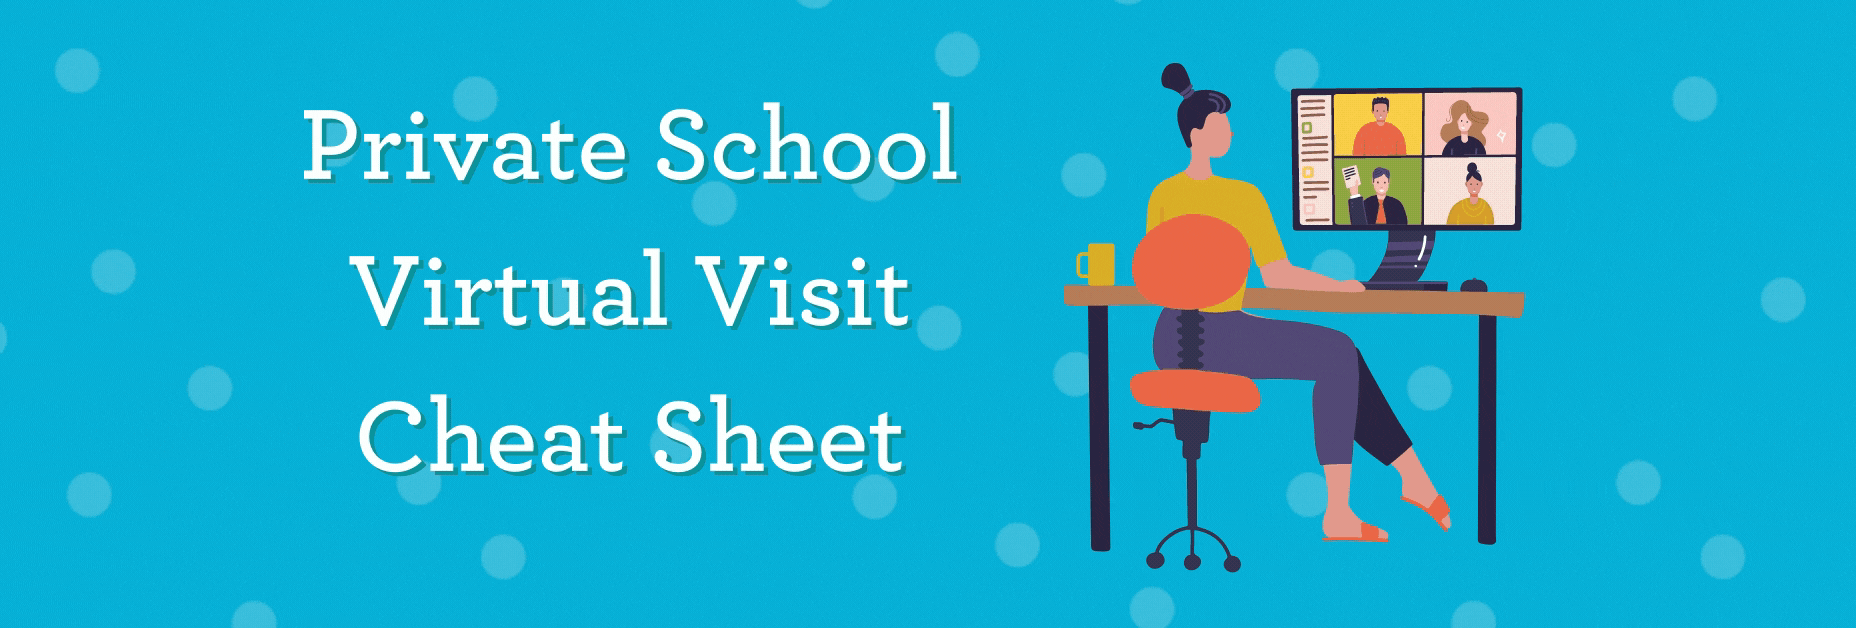 Private School Virtual Visit Cheat Sheet